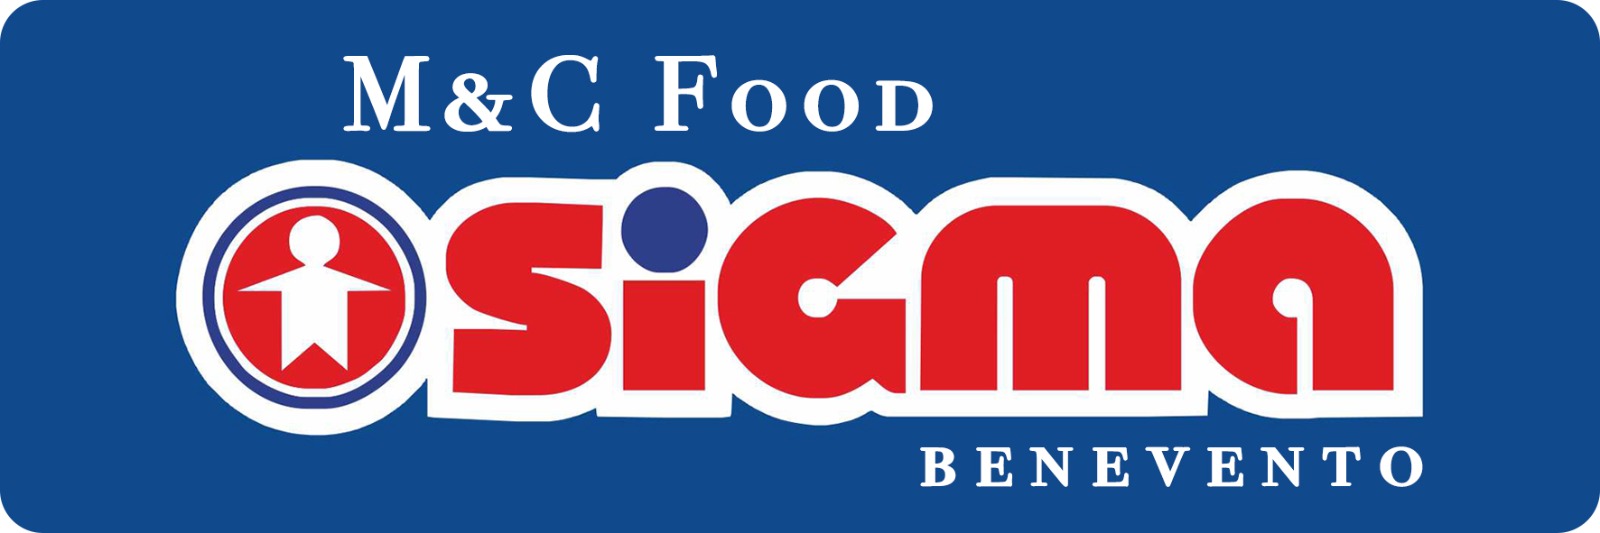 Sigma Benevento M&C Food